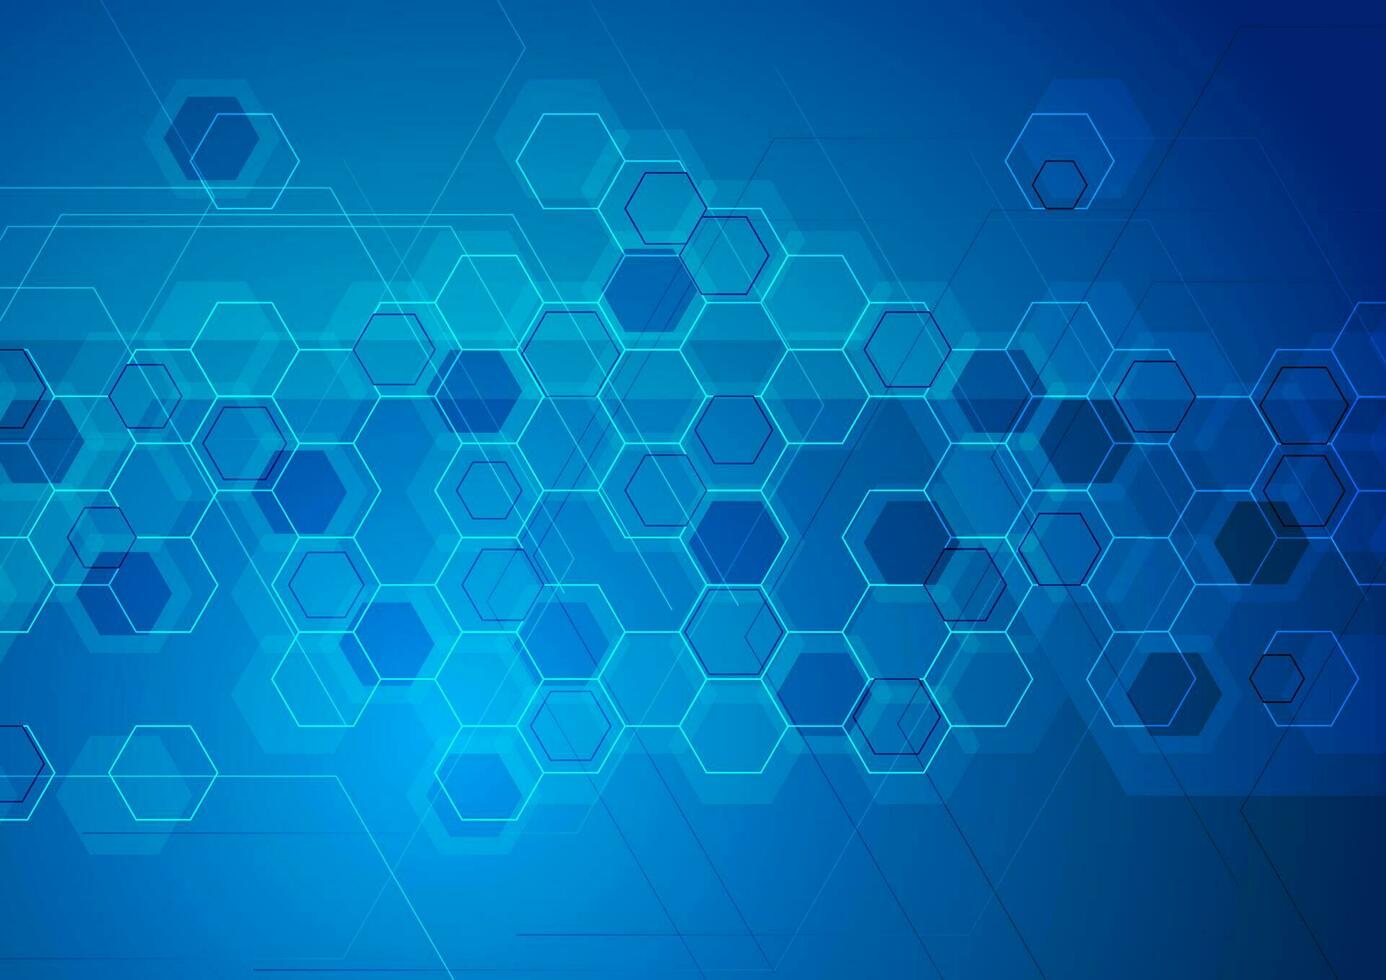 Bright blue abstract tech hexagonal background vector